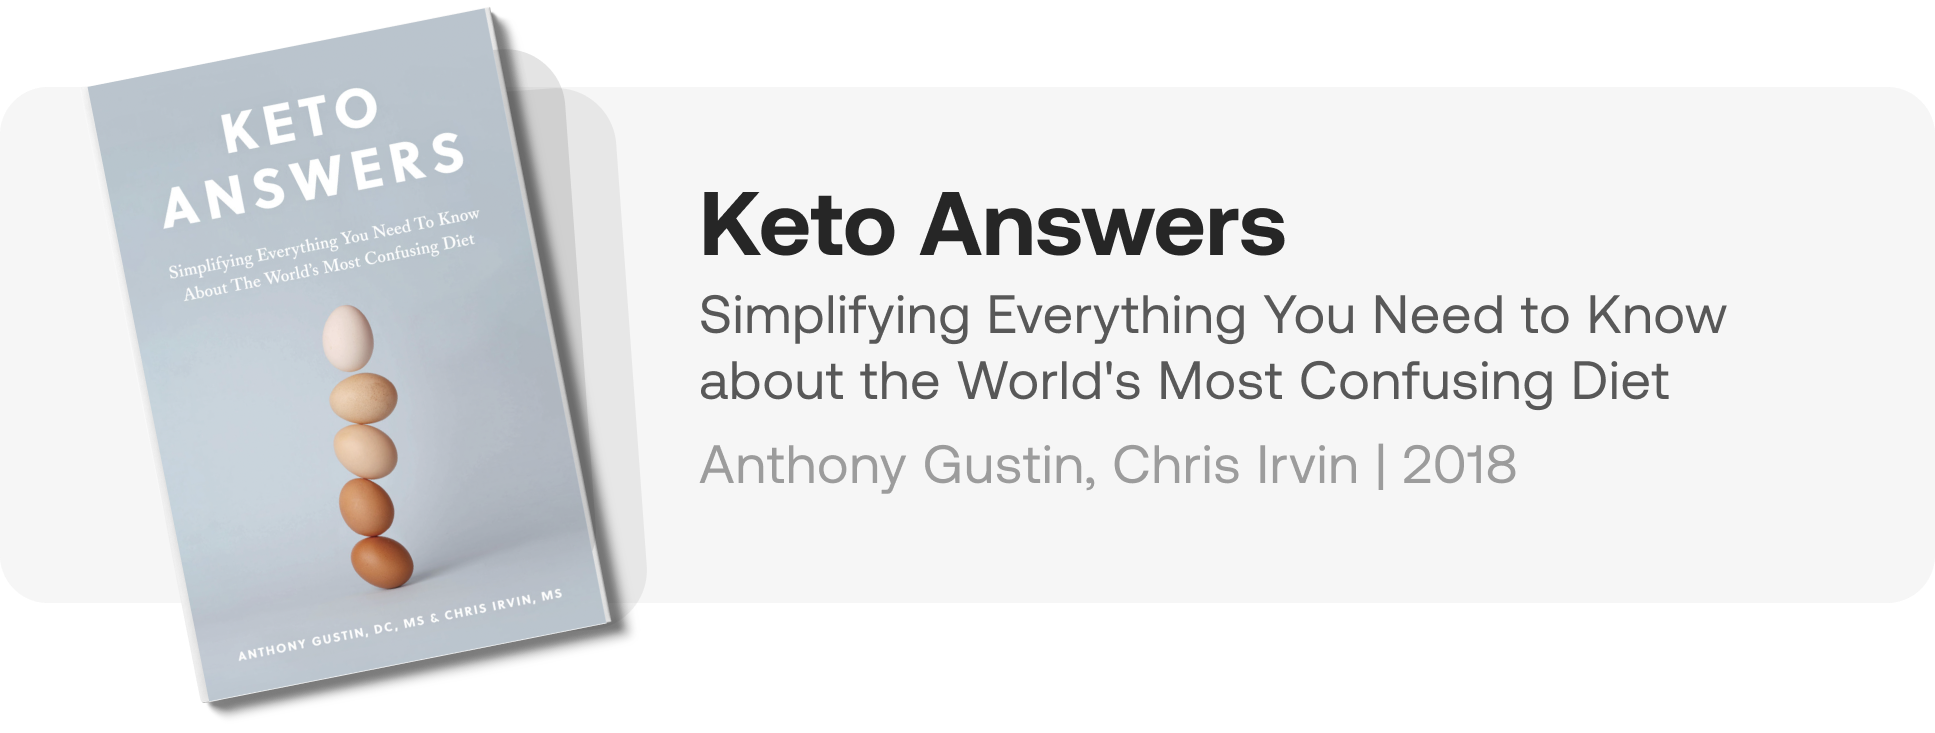 keto answers book cover